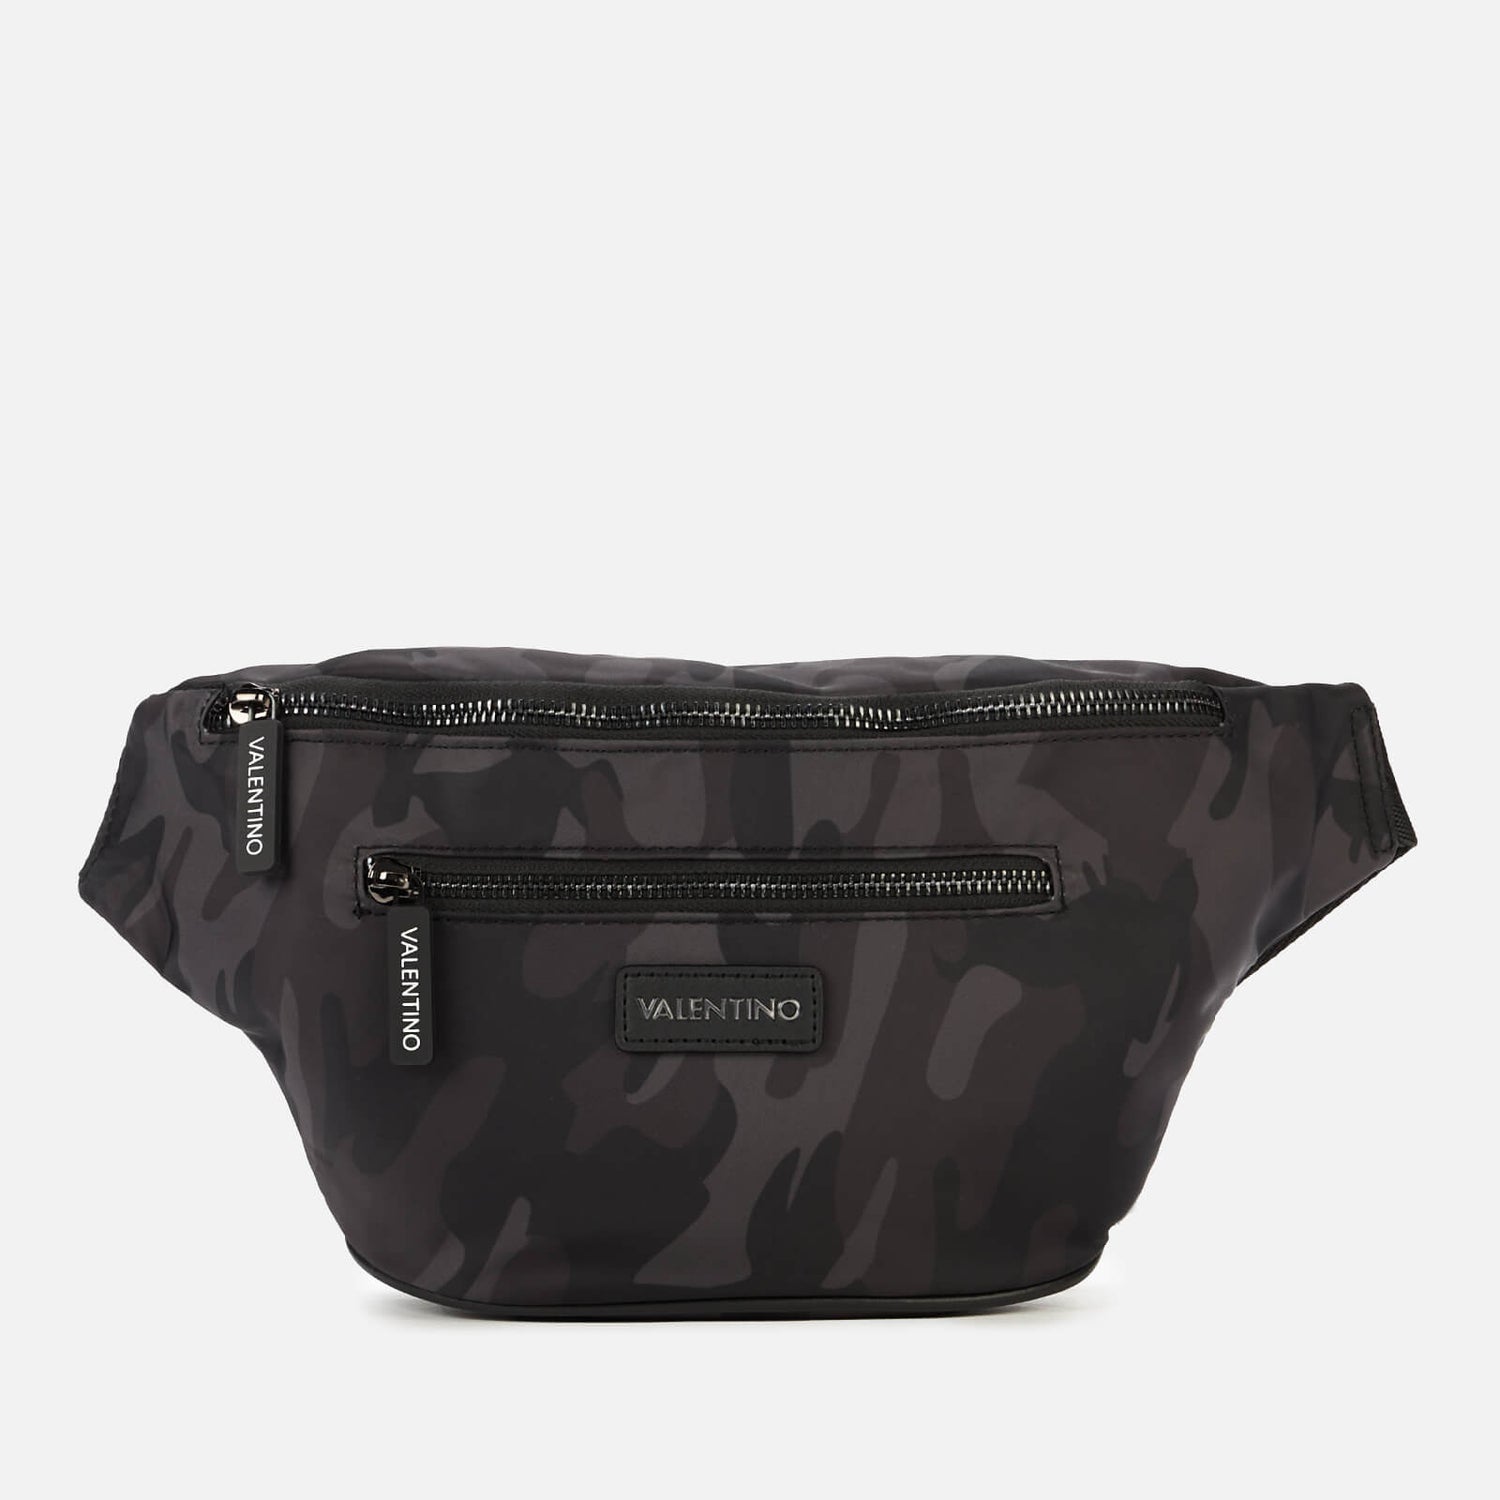 Valentino Men's Grappa Belt Bag - Black